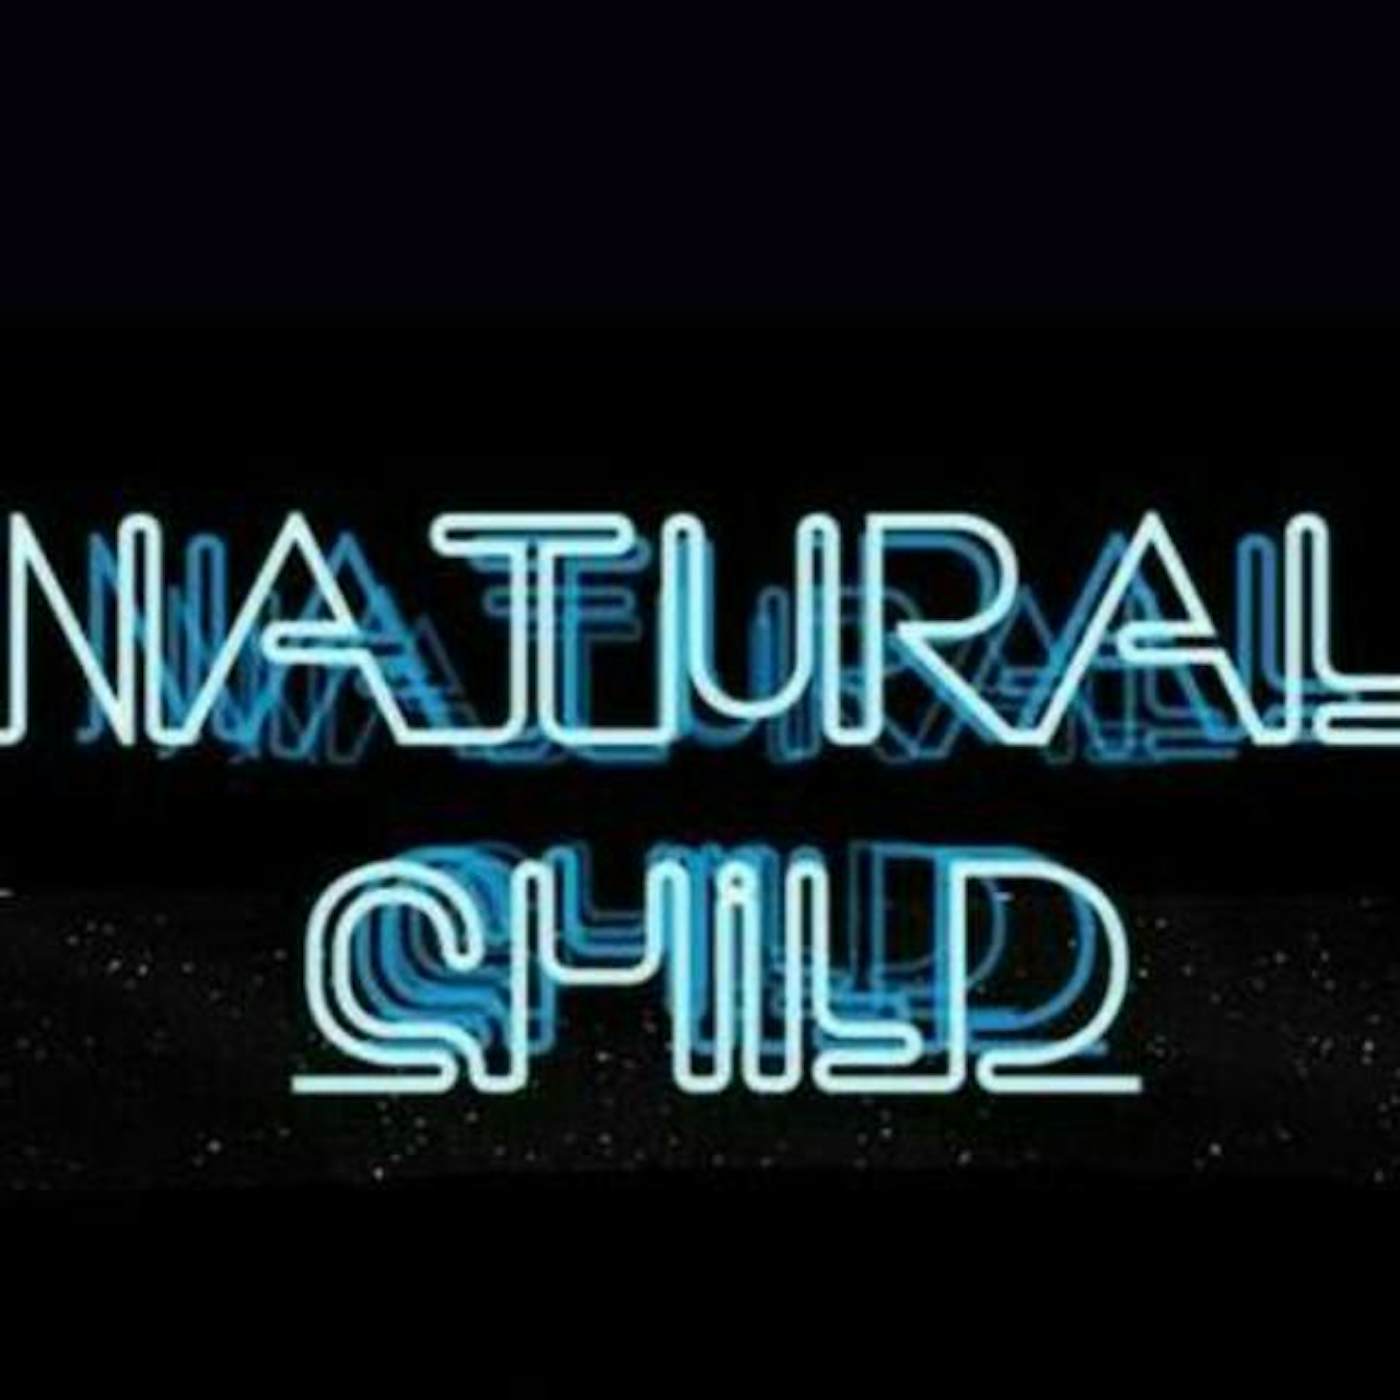 Natural Child